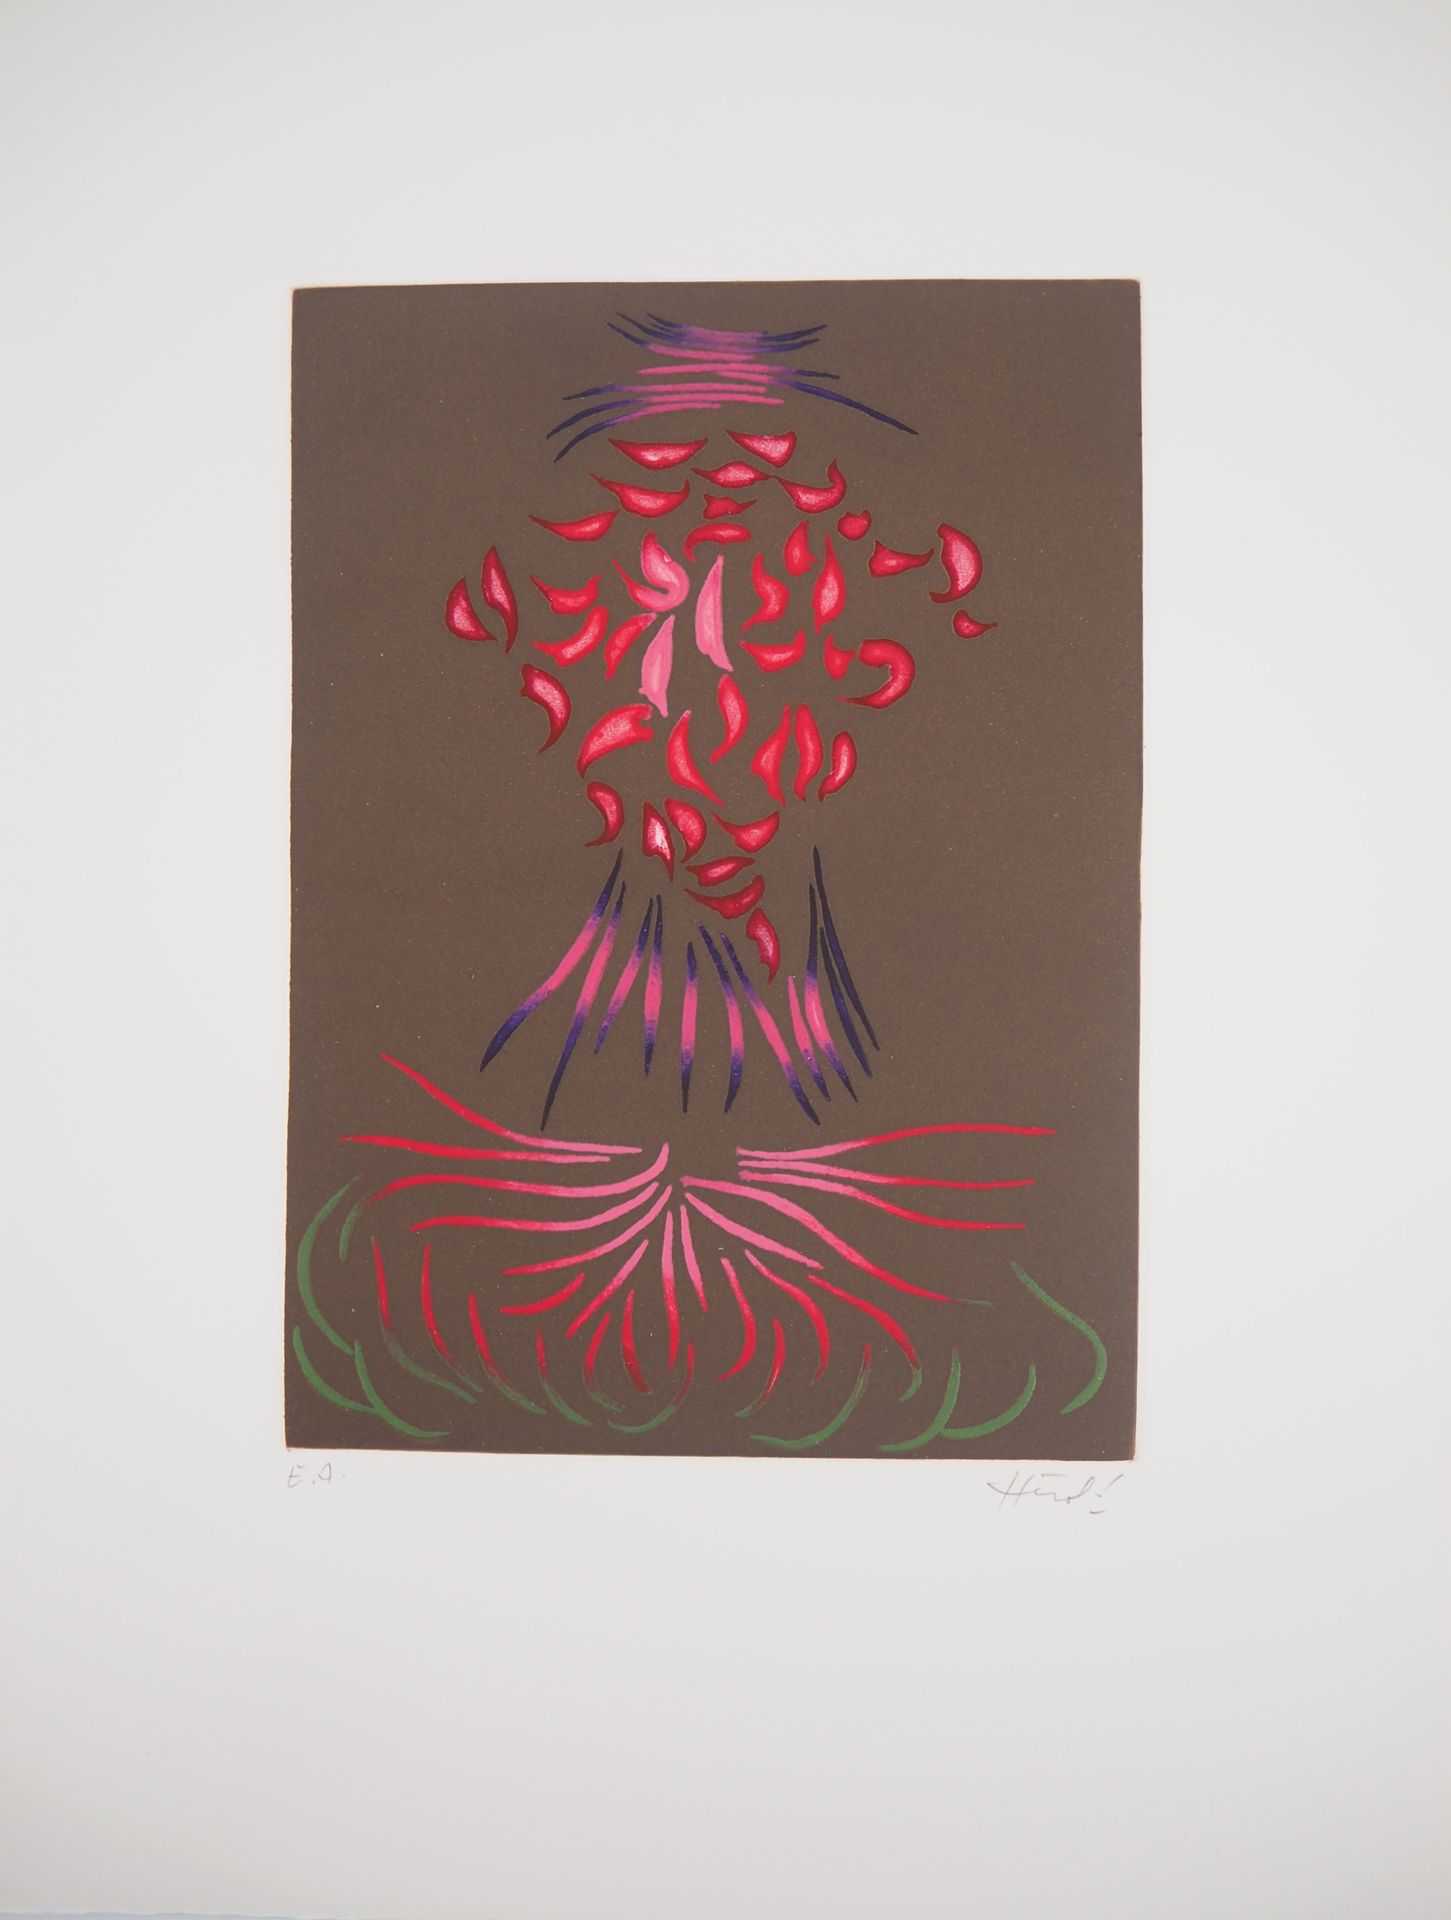 Jacques HEROLD Jacques HEROLD (1910-1985)

抽象的天竺葵花，1975年

原创水印蚀刻画

铅笔签名的艺术家

合理的&hellip;